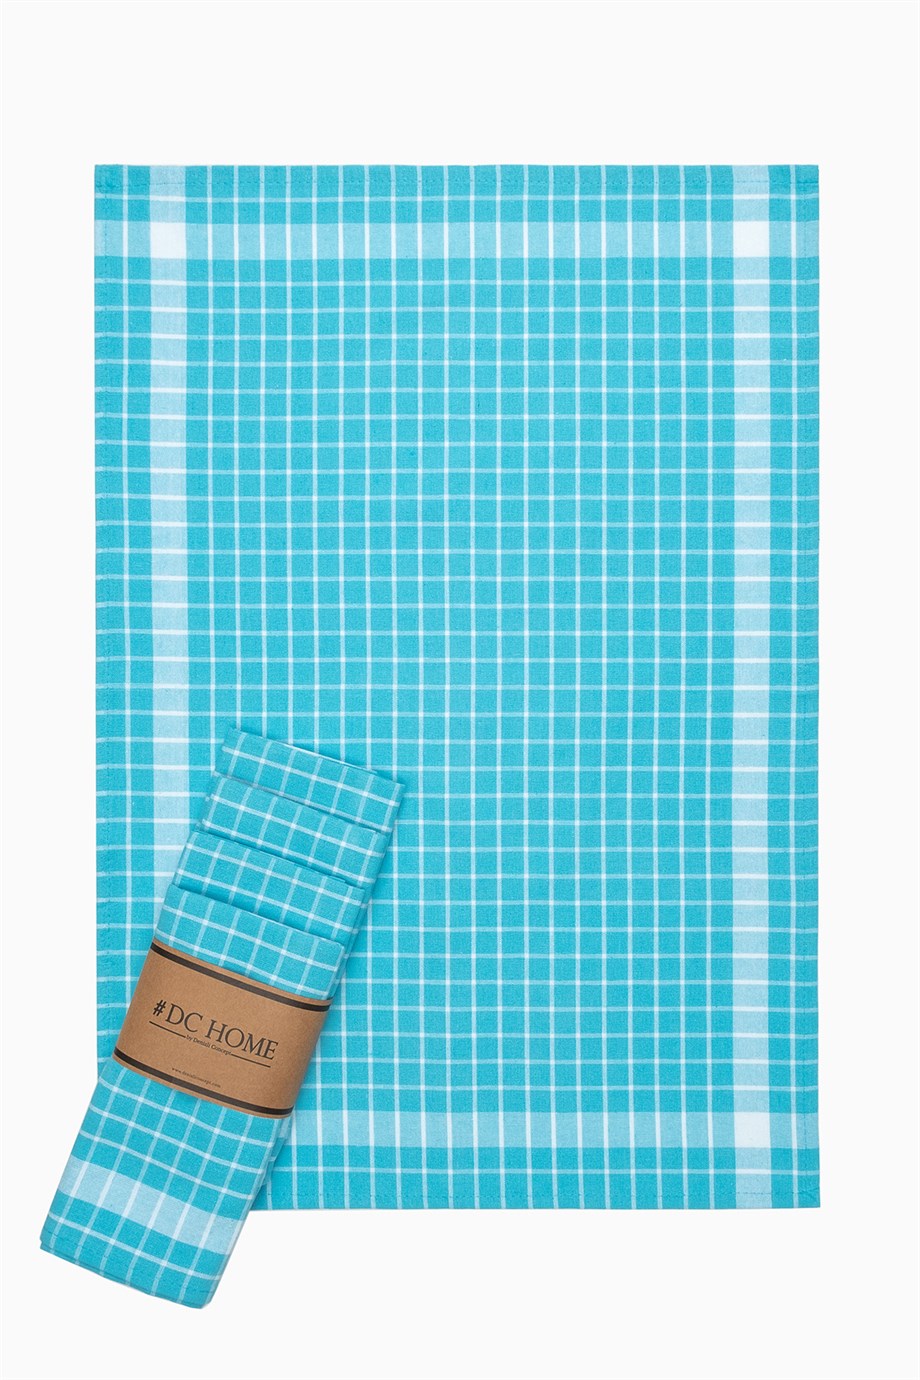 DENIZLI CONCEPT Checkered Tea Towel Turquoise